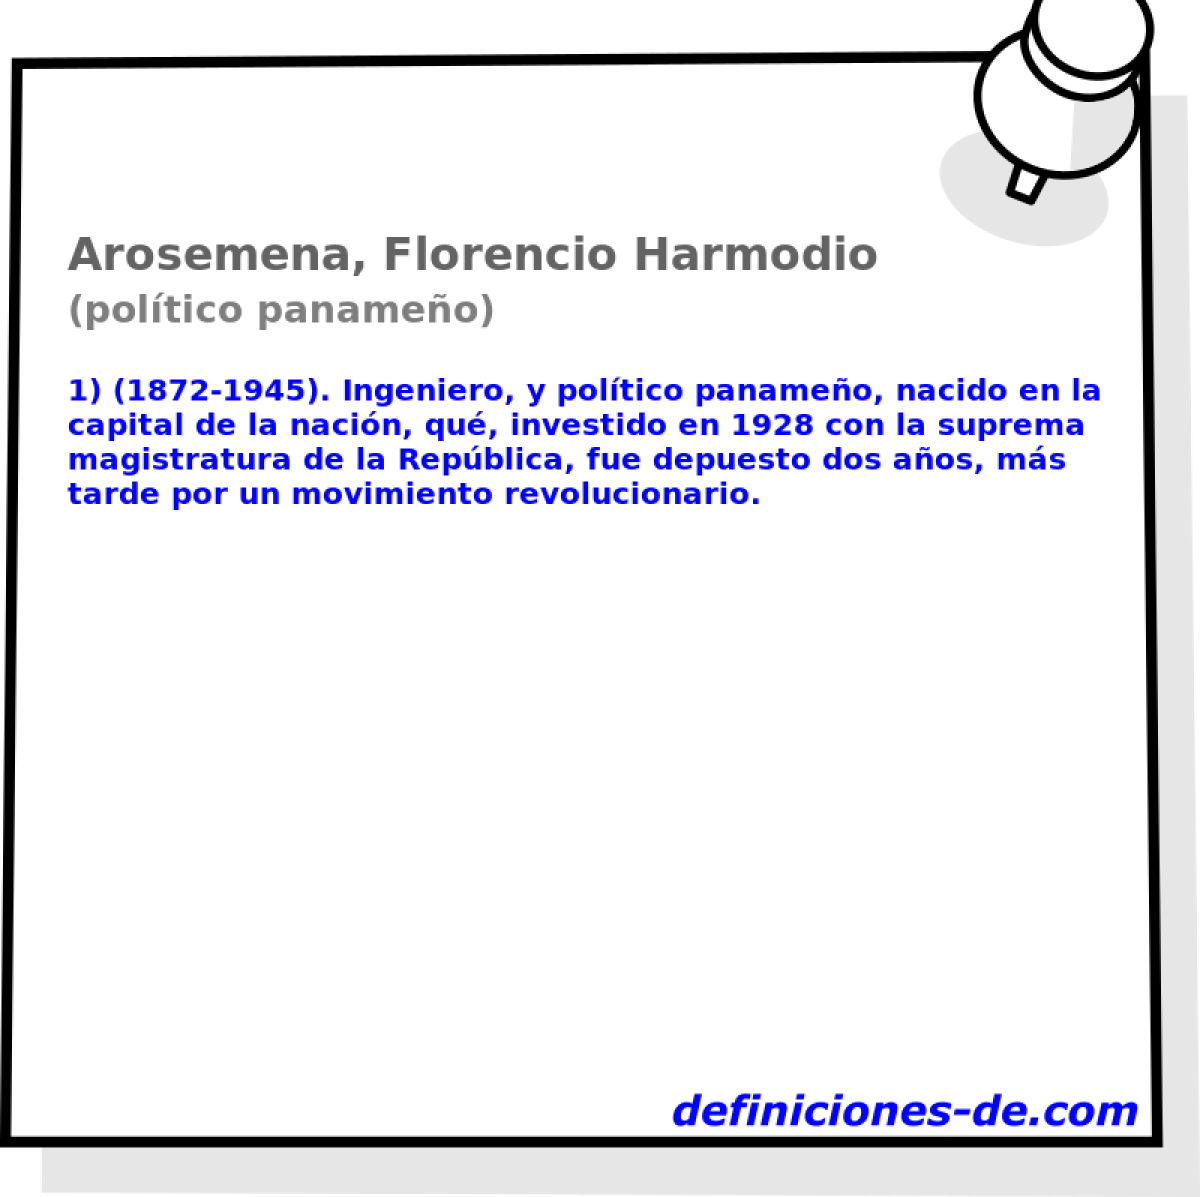 Arosemena, Florencio Harmodio (poltico panameo)